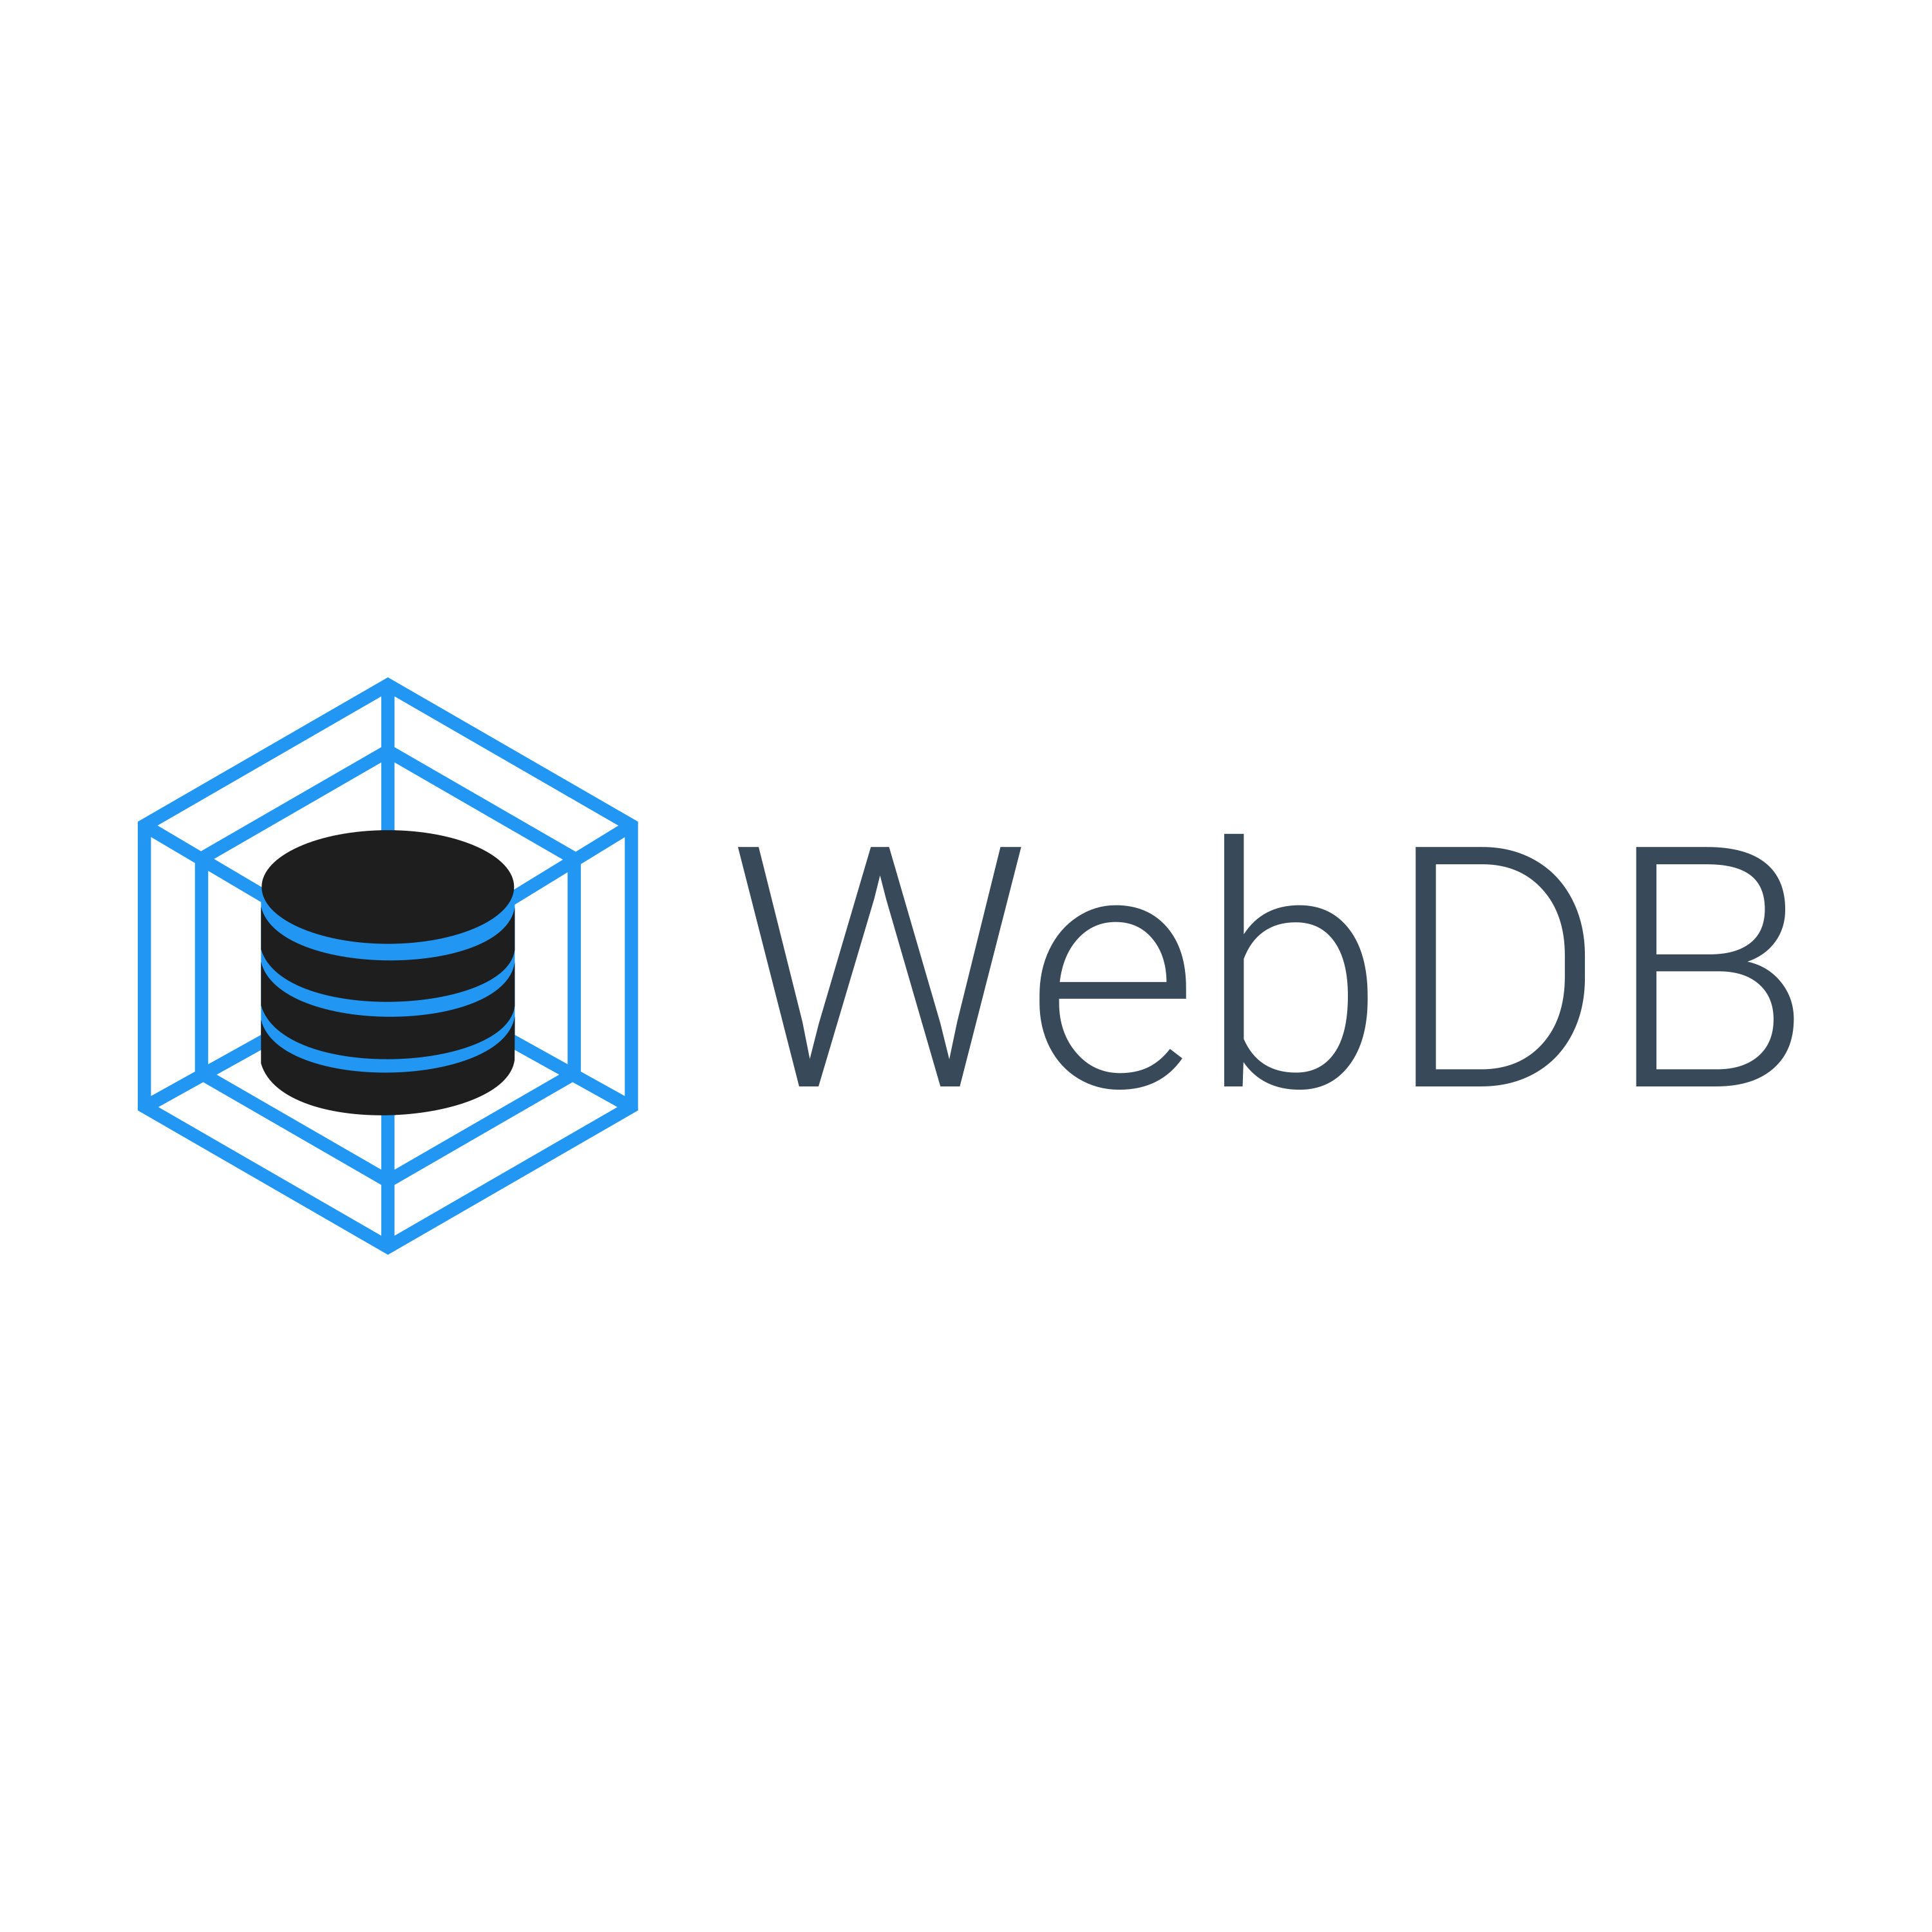 Webdb Logo  Transparent Image